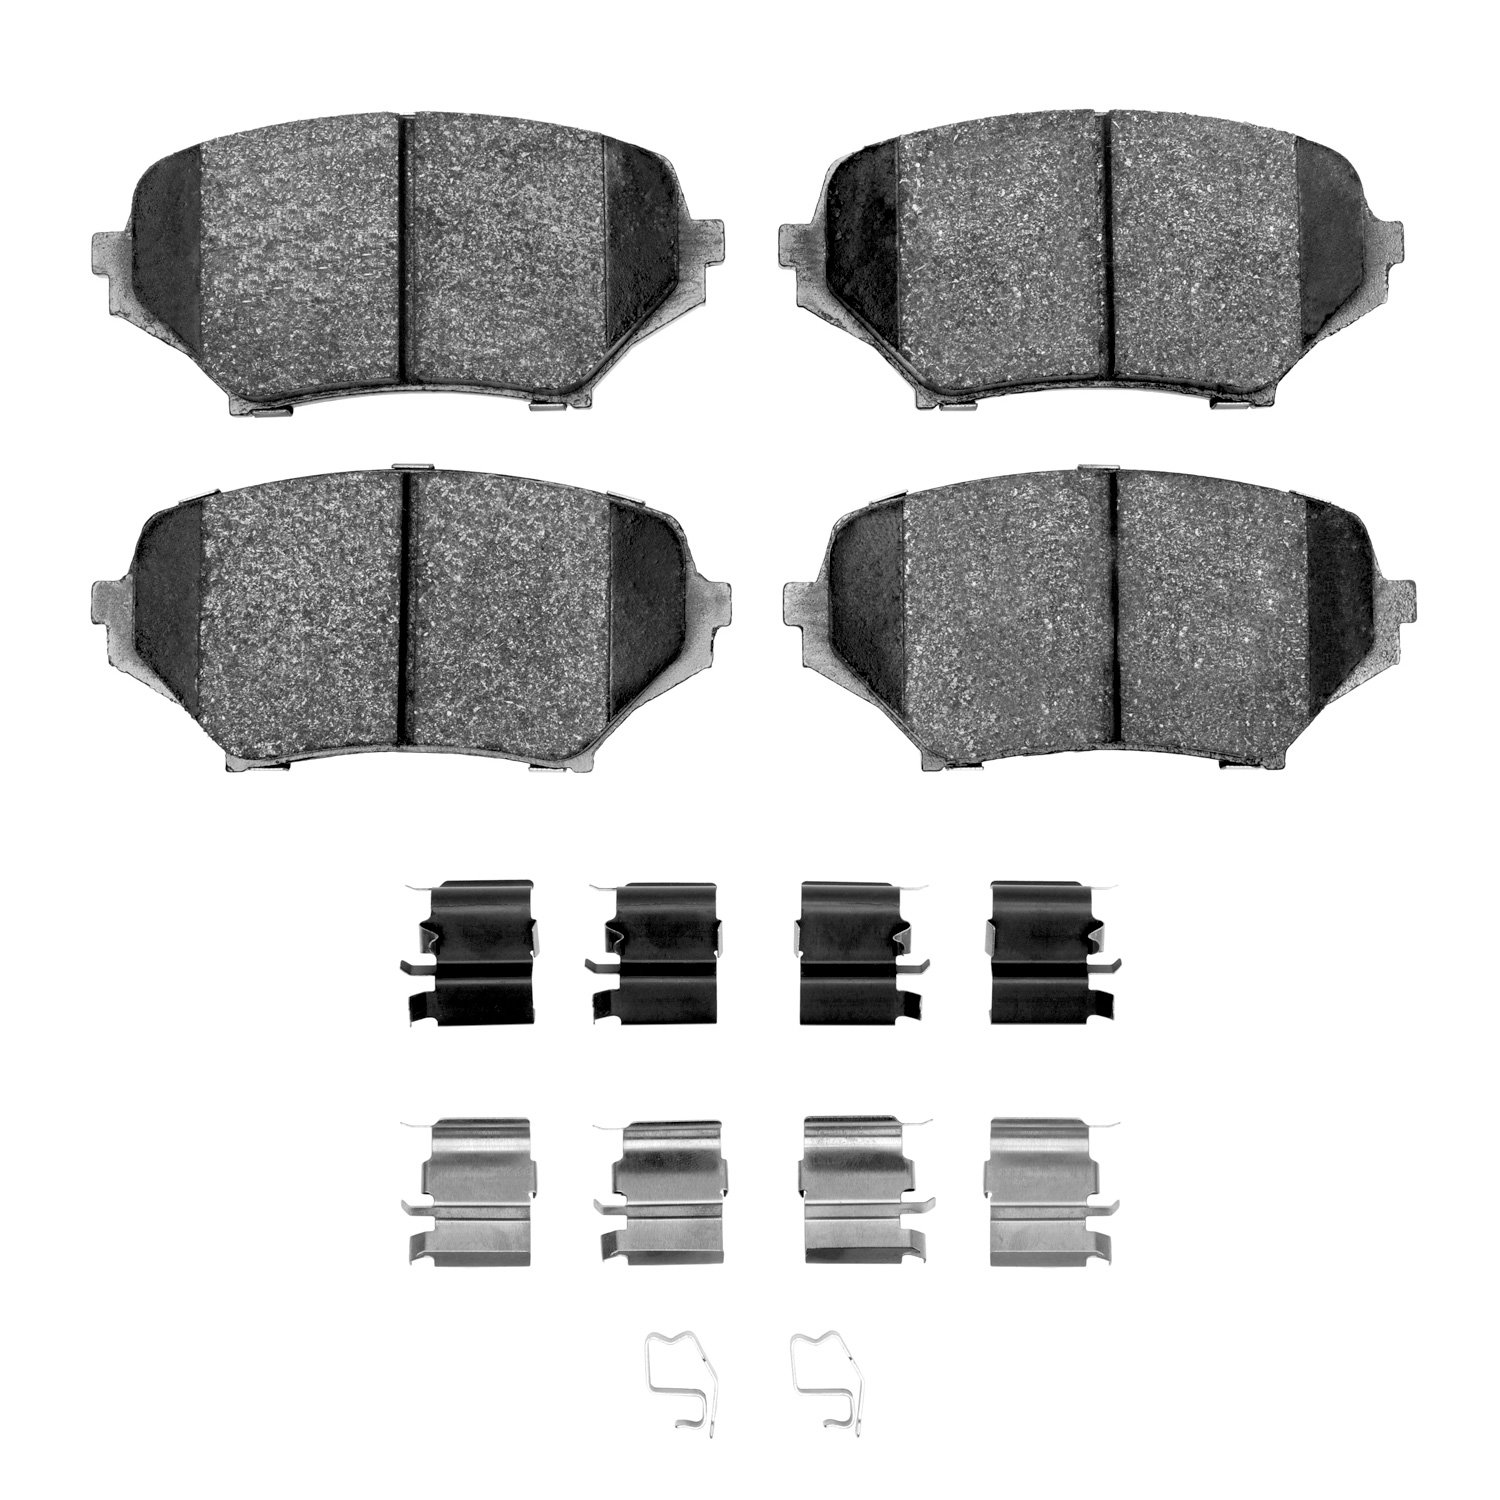 1310-1179-01 3000-Series Ceramic Brake Pads & Hardware Kit, 2006-2015 Ford/Lincoln/Mercury/Mazda, Position: Front